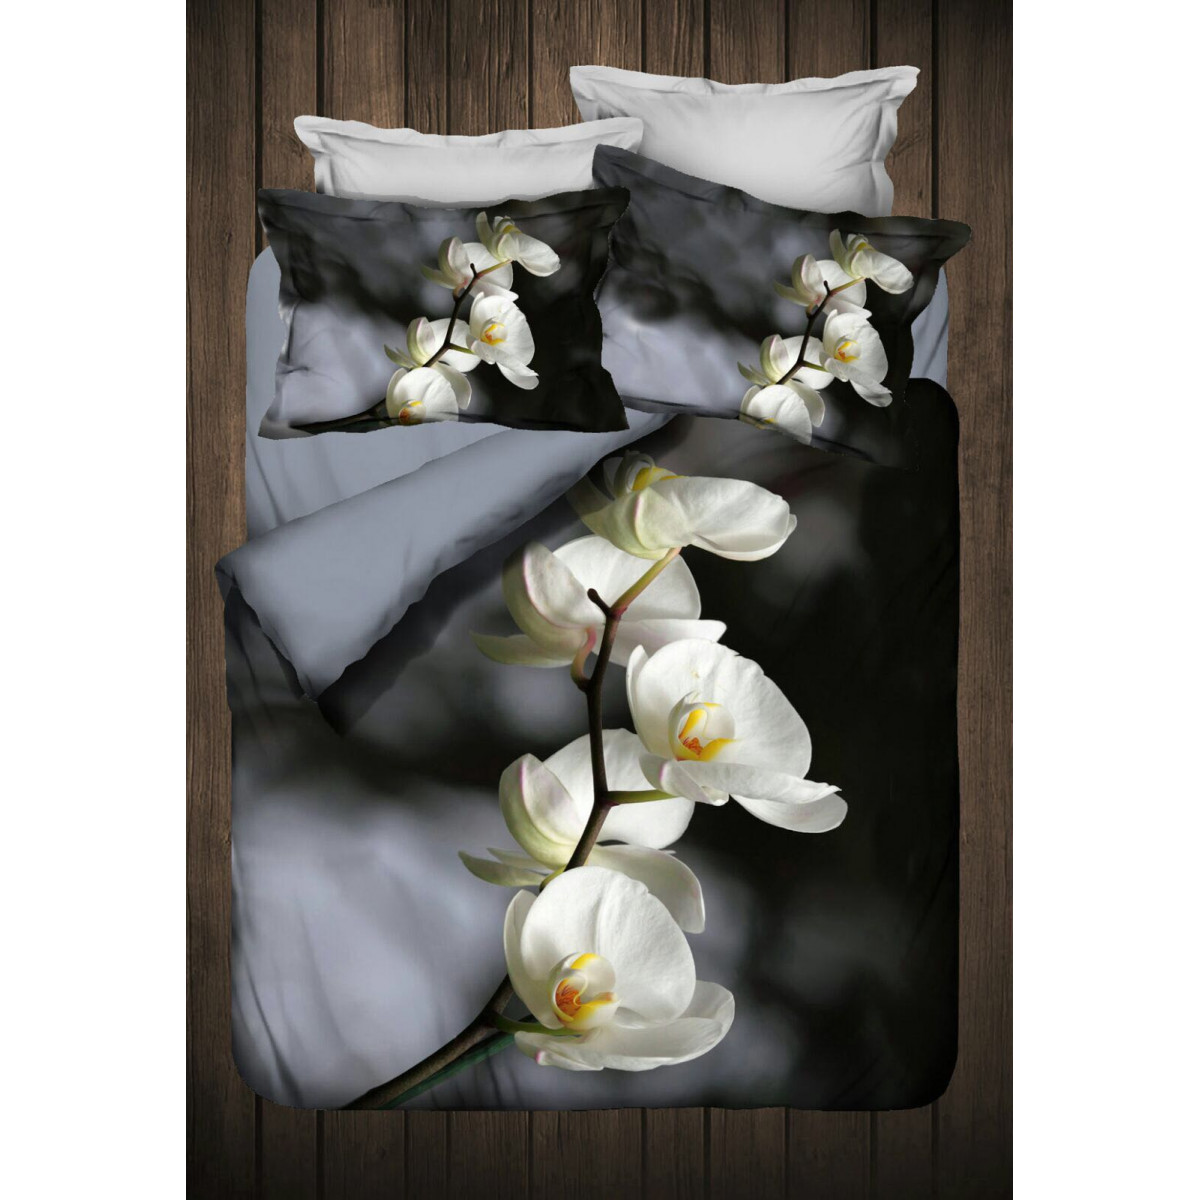 Спален комплект 3D - 3 части - Орхидеи 2